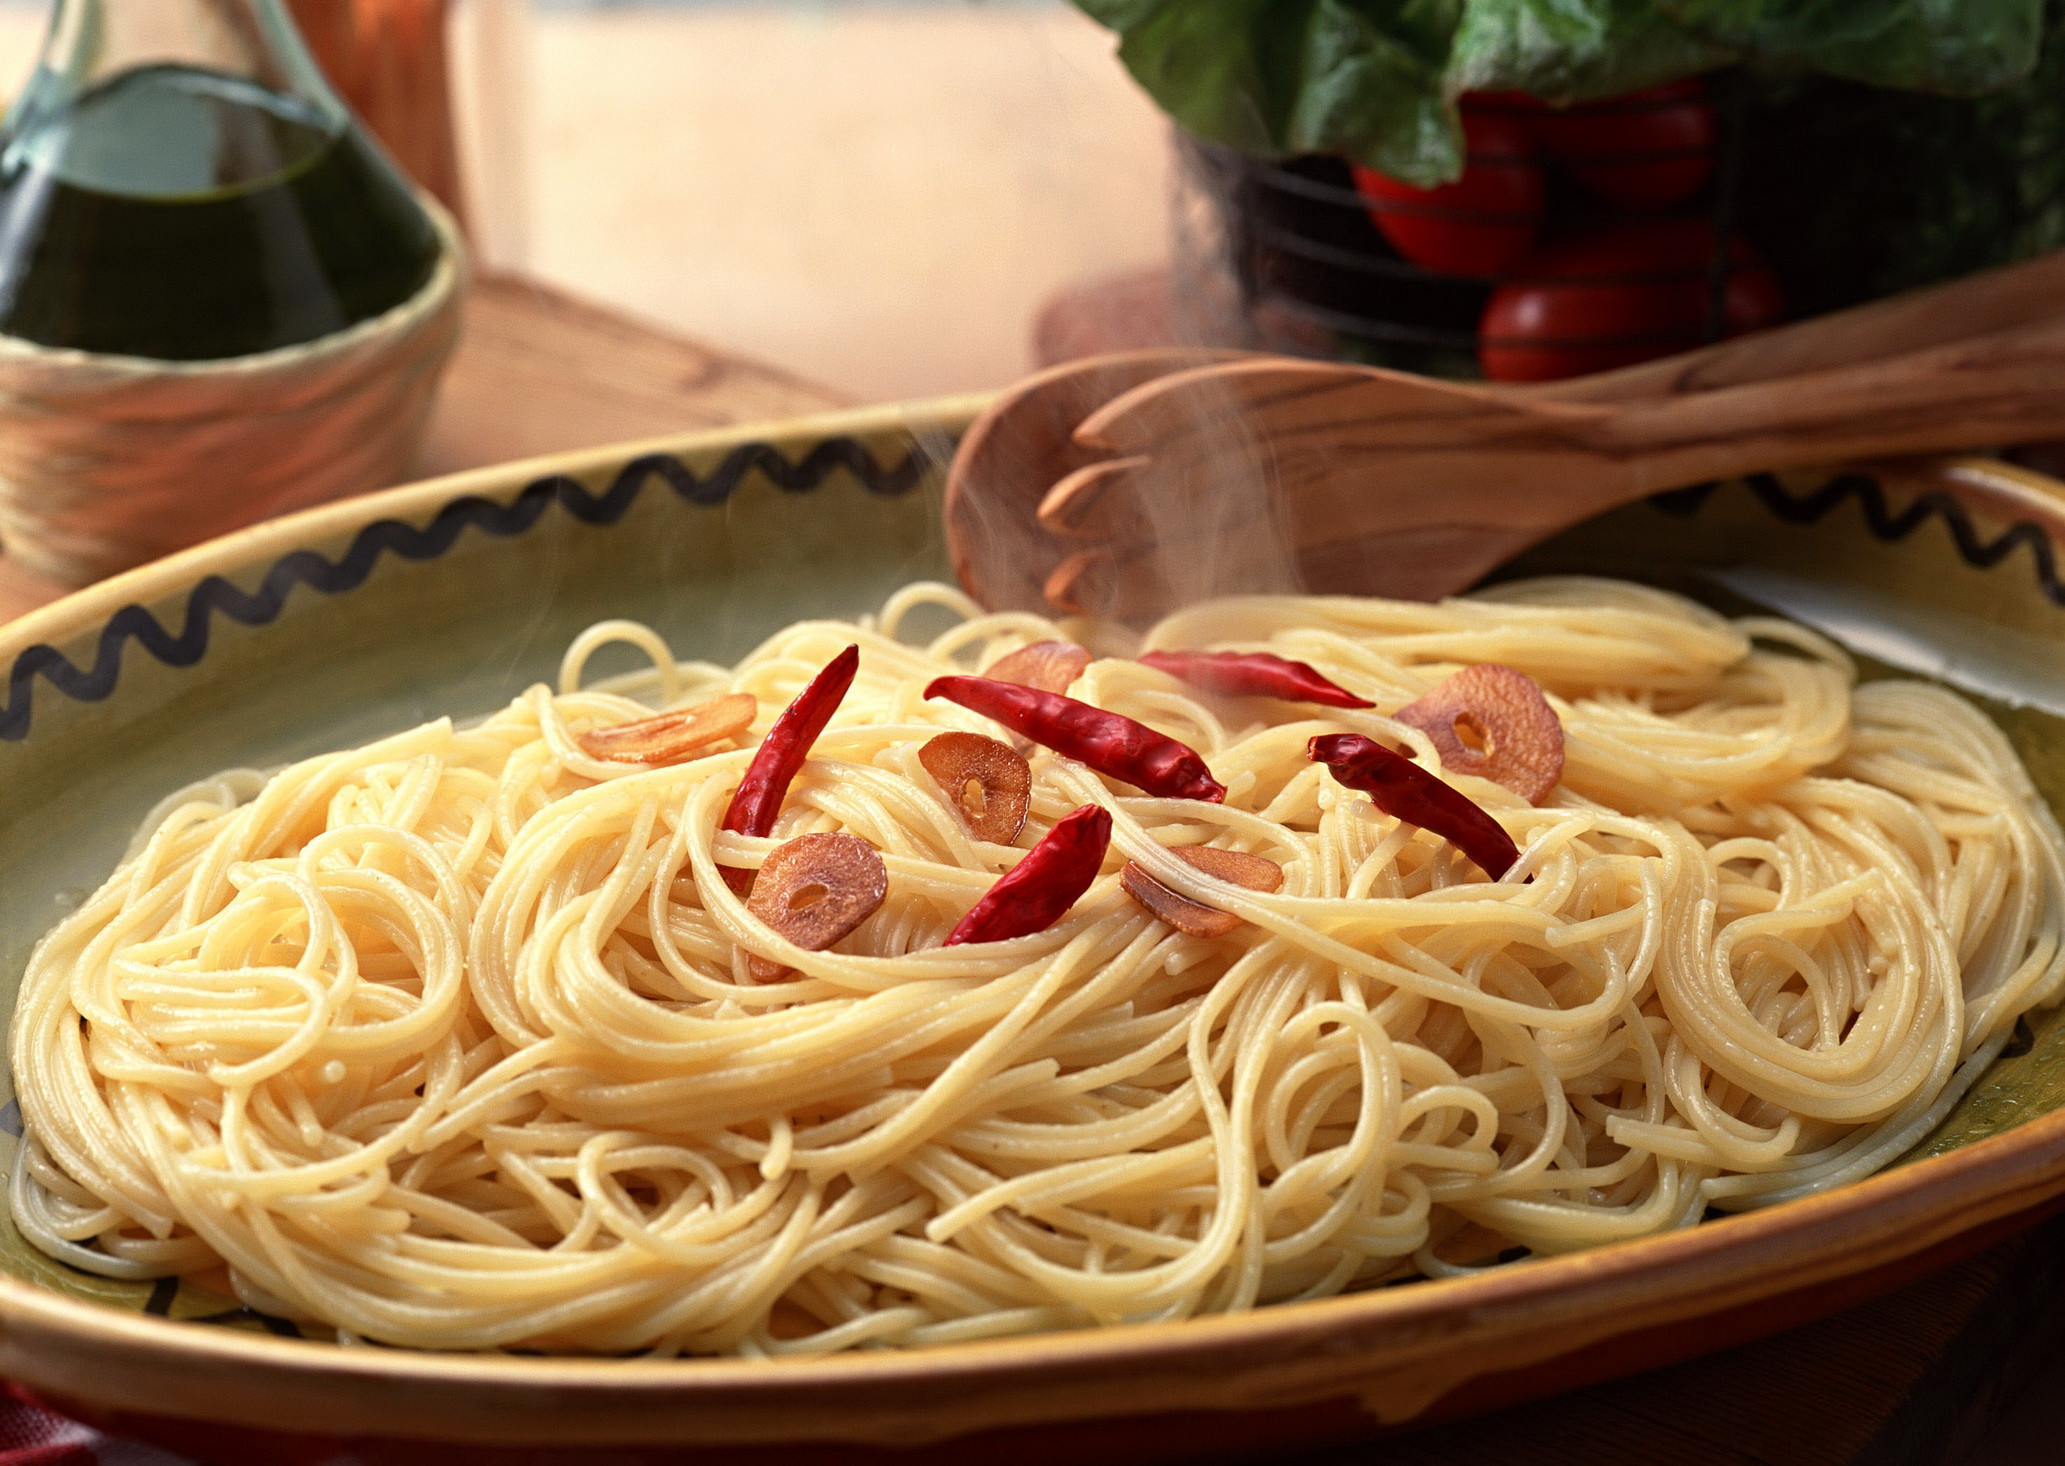 Лапша язык. Итальянская кухня. Спагетти. Макароны длинные. Итальянская паста.